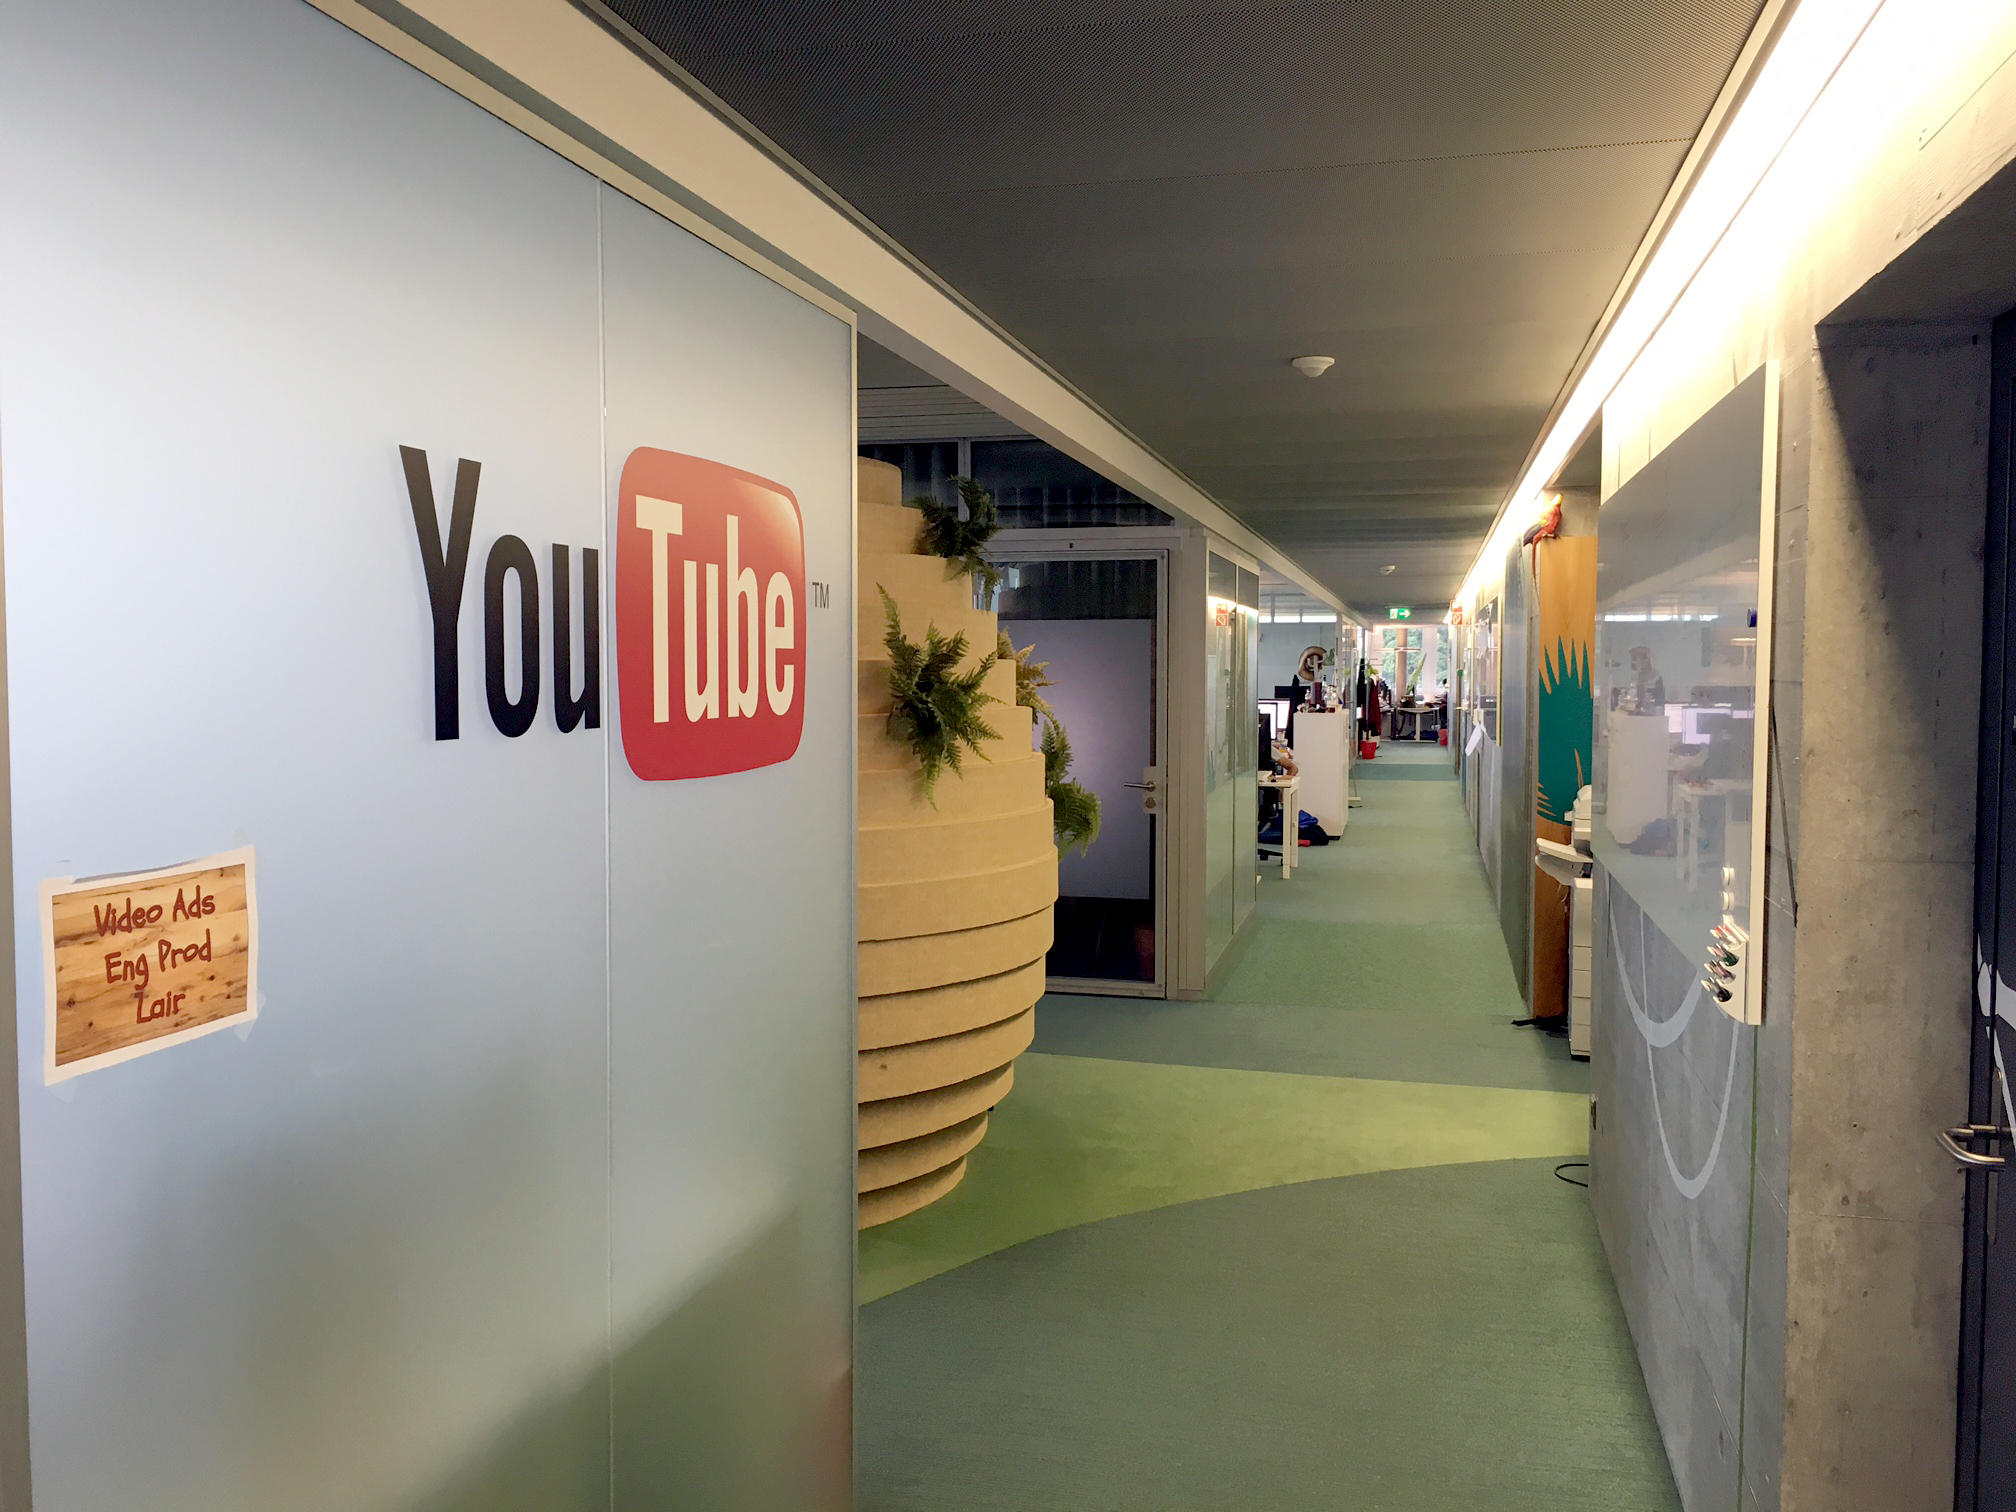 Офис компании YouTube. Фото © ТАСС / DPA / Jenny Tobien